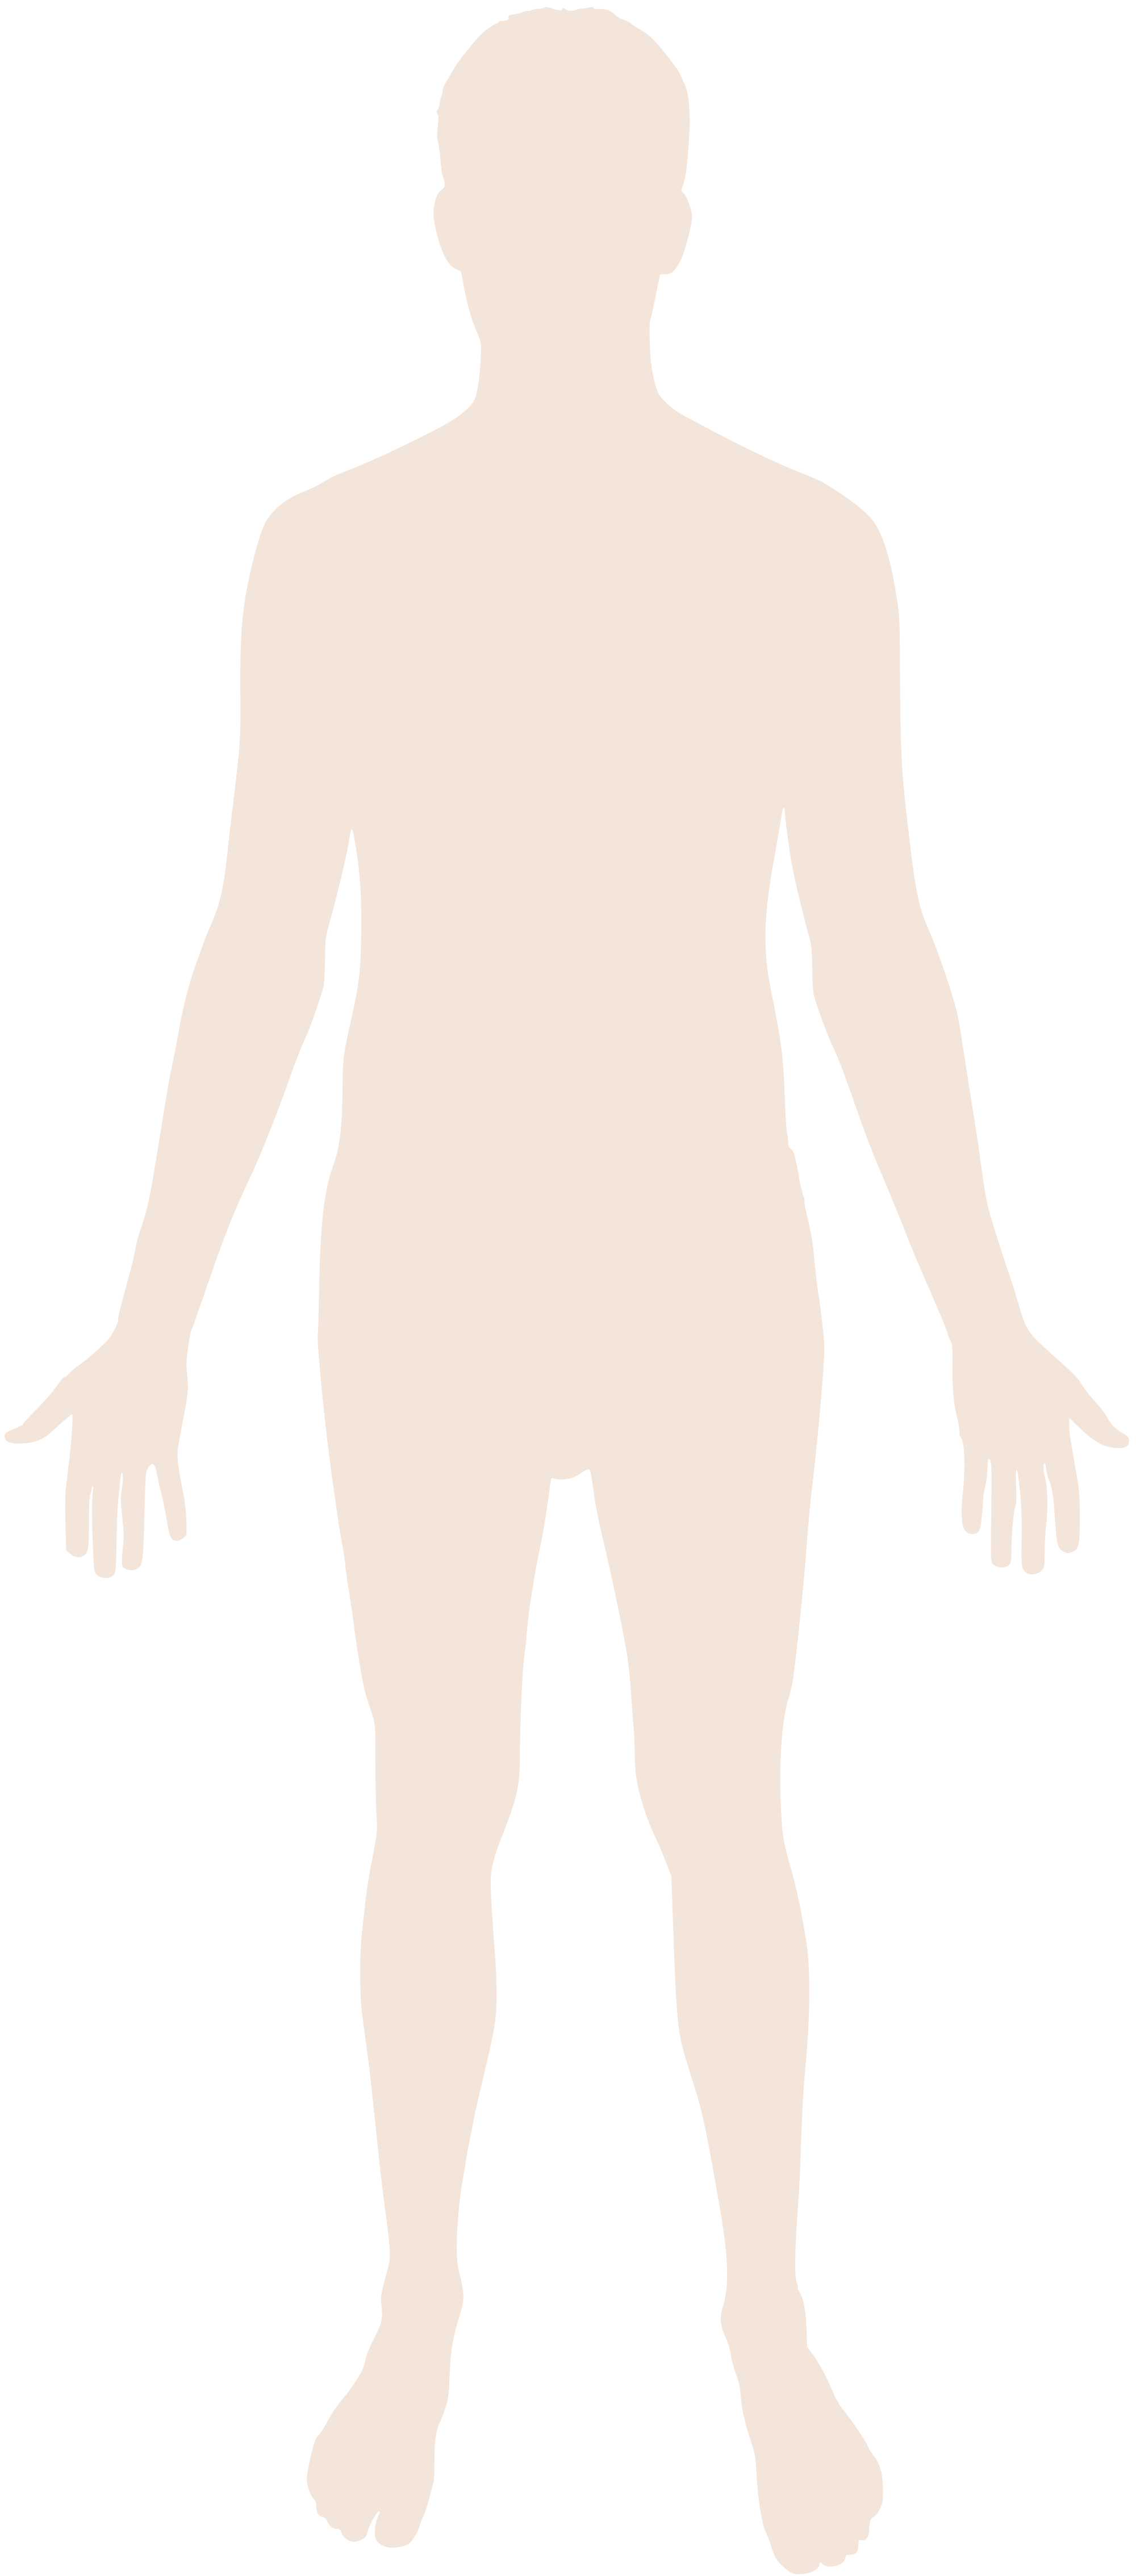 File:Human body silhouette - Wikimedia Commons